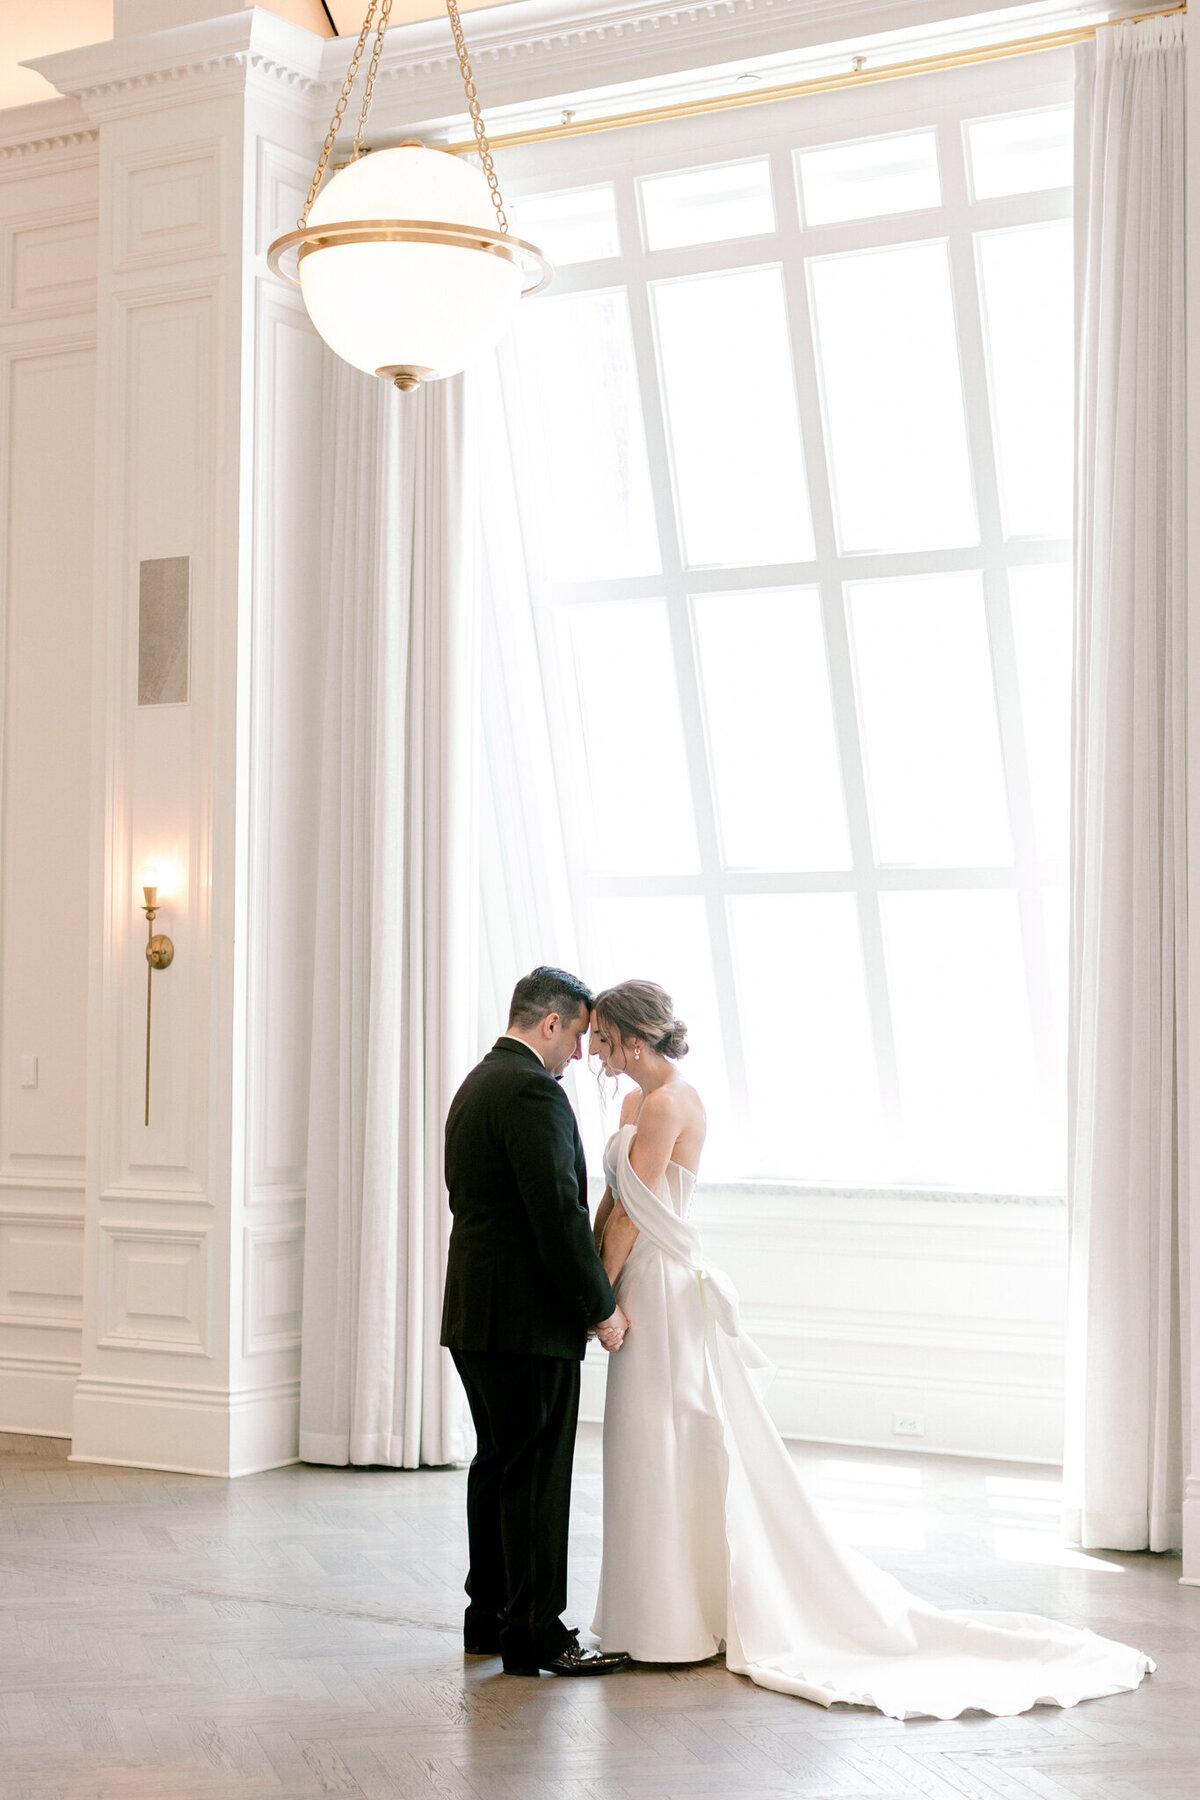 Virginia & Michael's Wedding at the Adolphus Hotel | Dallas Wedding Photographer | Sami Kathryn Photography-57